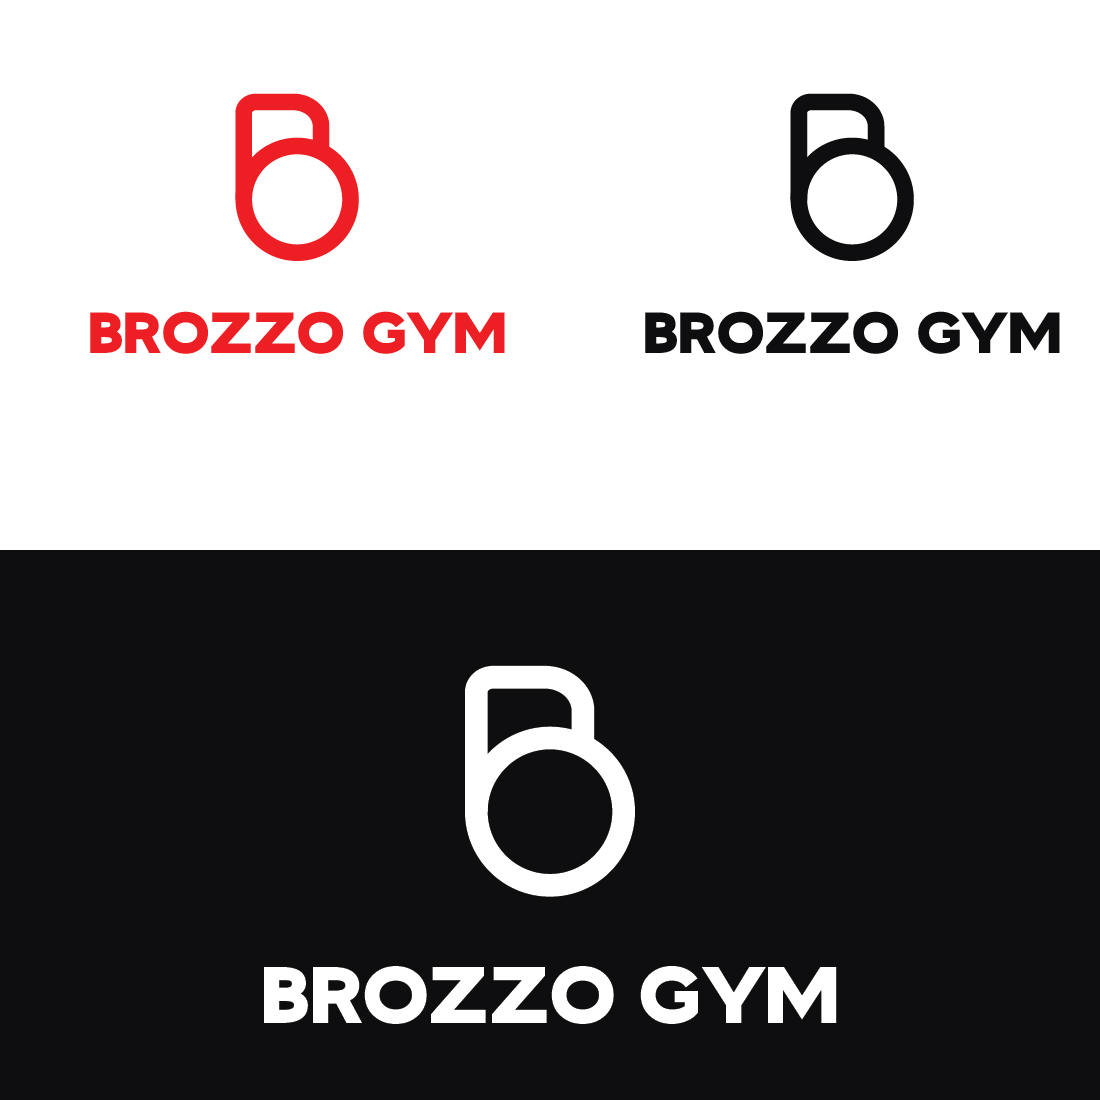 Brozzo Gym Logo Vector Design Template cover image.